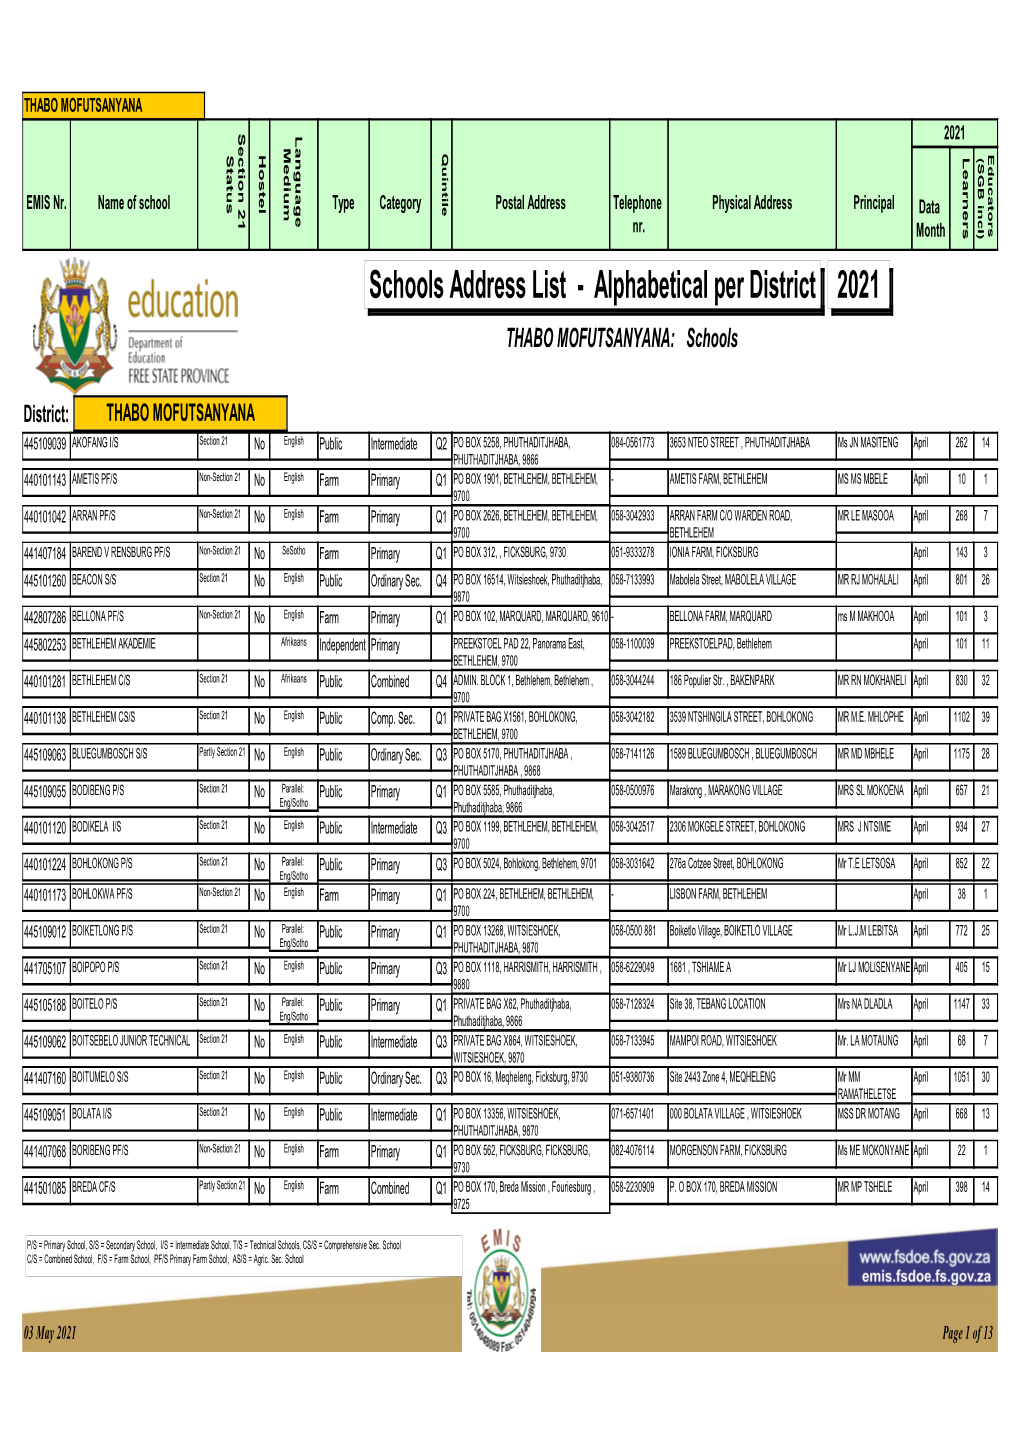 Schools Address List - Alphabetical Per District 2021 THABO MOFUTSANYANA: Schools